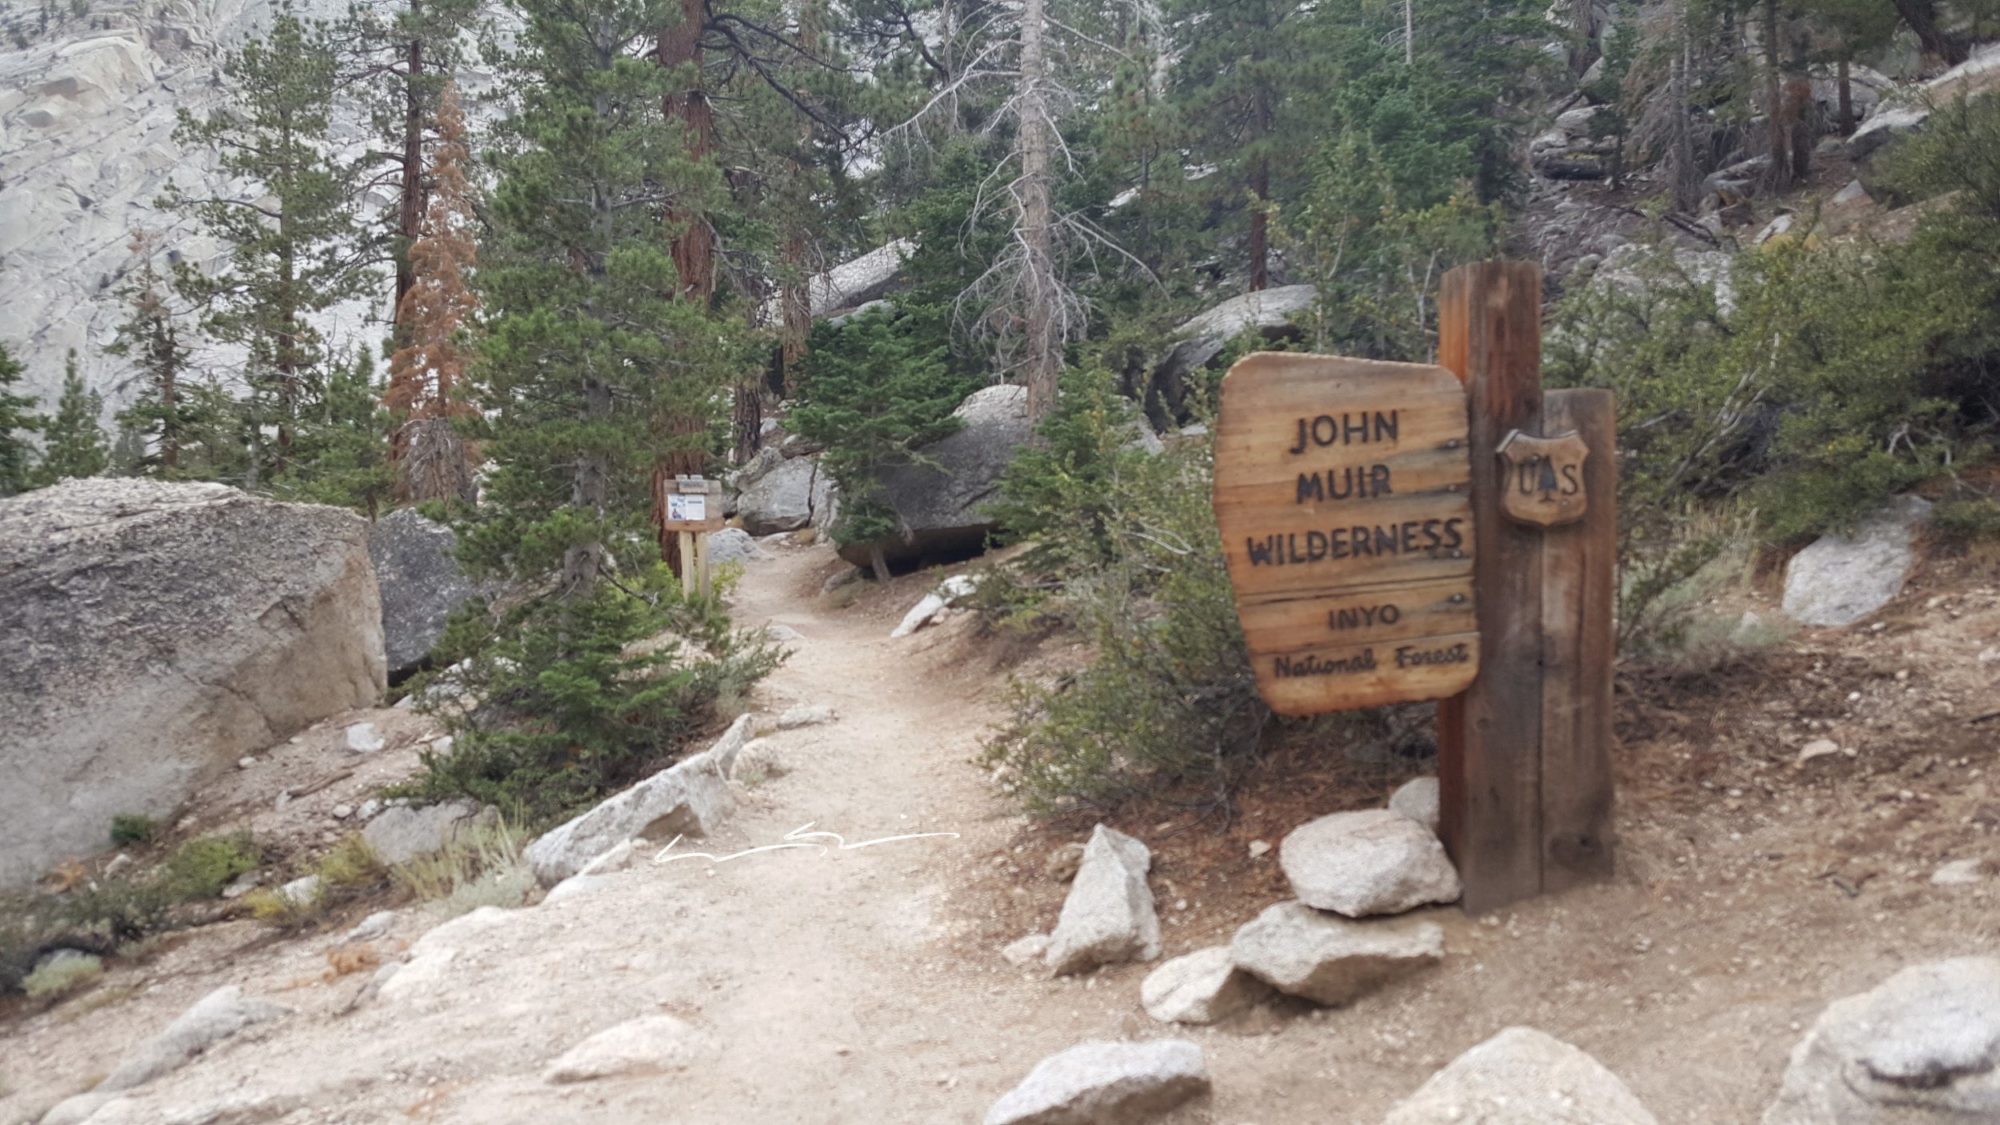 entering the john muir wilderness near mount whitney california